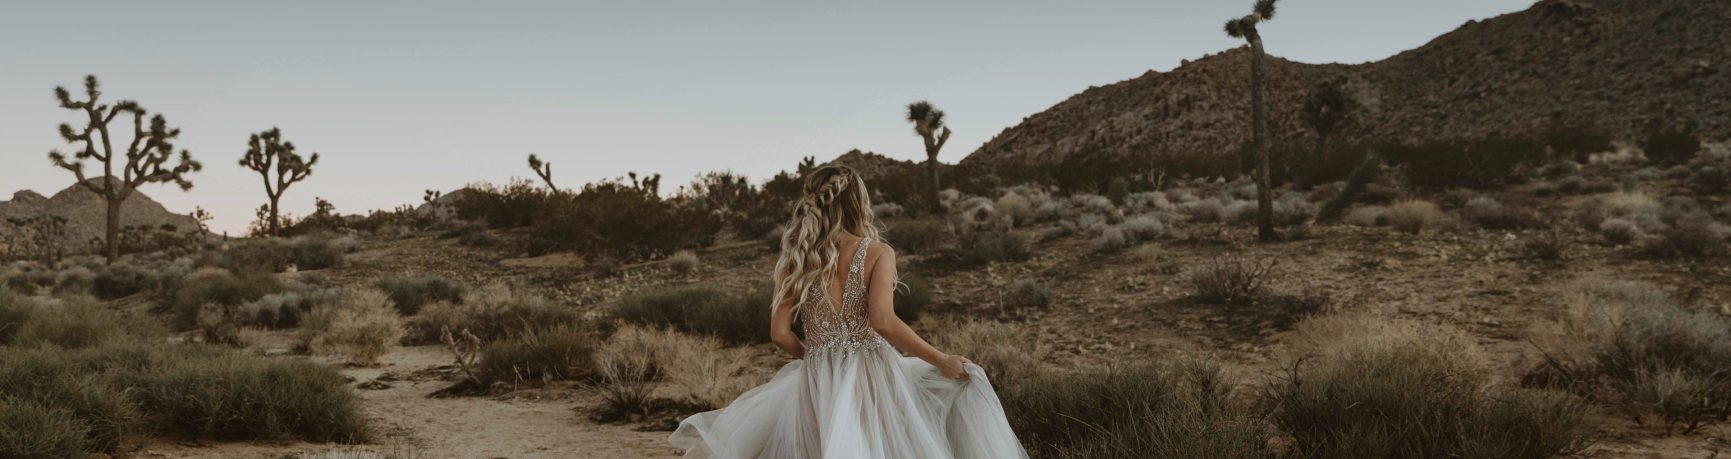 bride-walking-through-desert